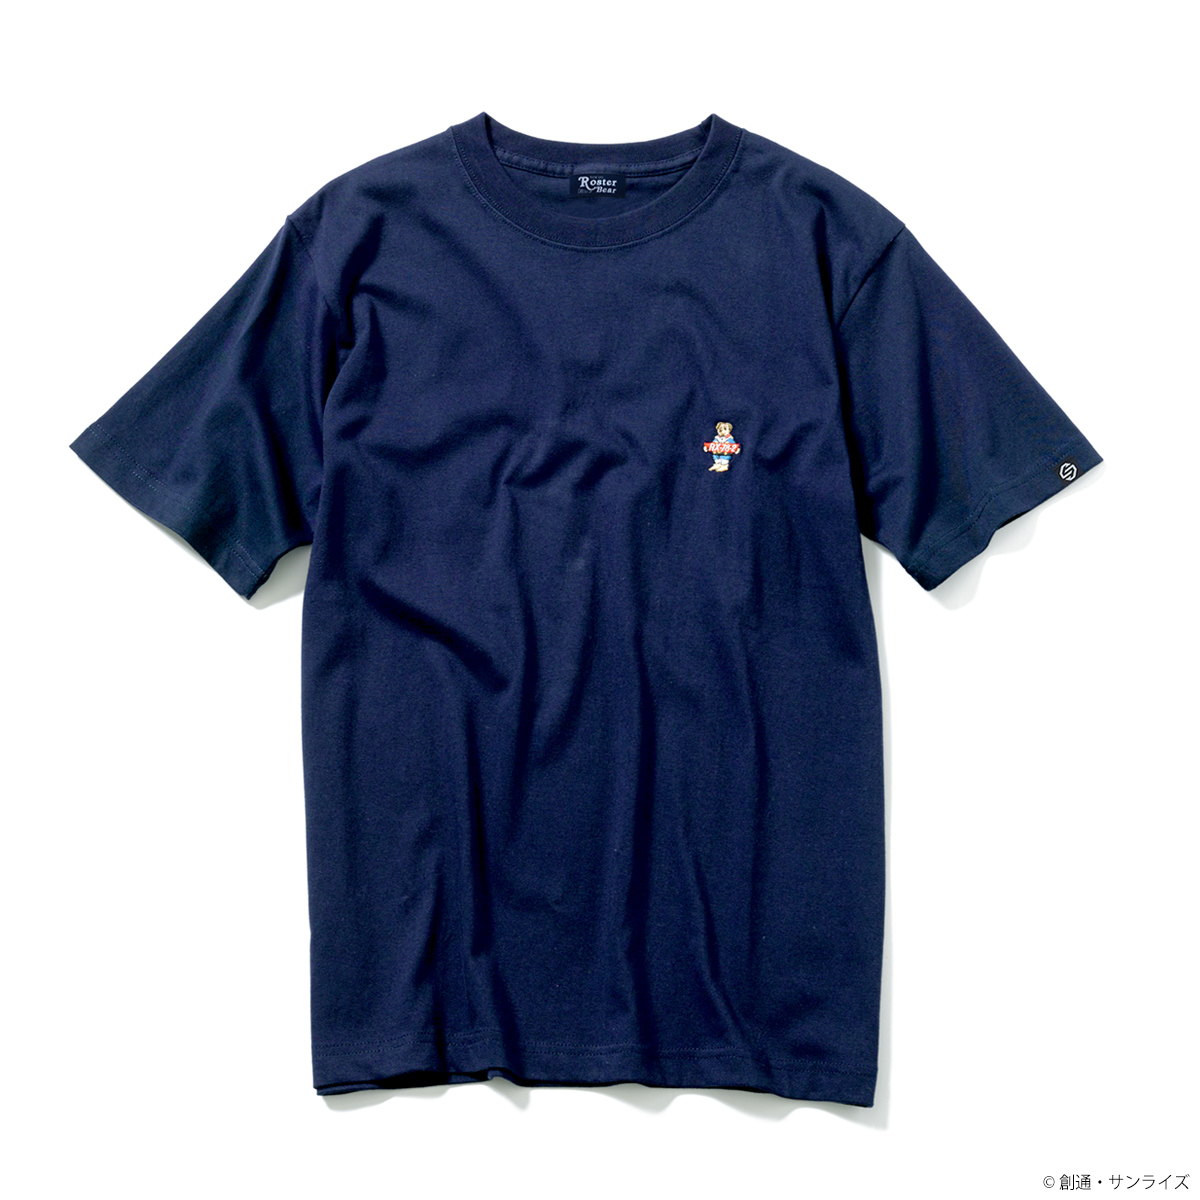 STRICT-G ROSTER BEAR『機動戦士ガンダム』 Tシャツ RX-78-2